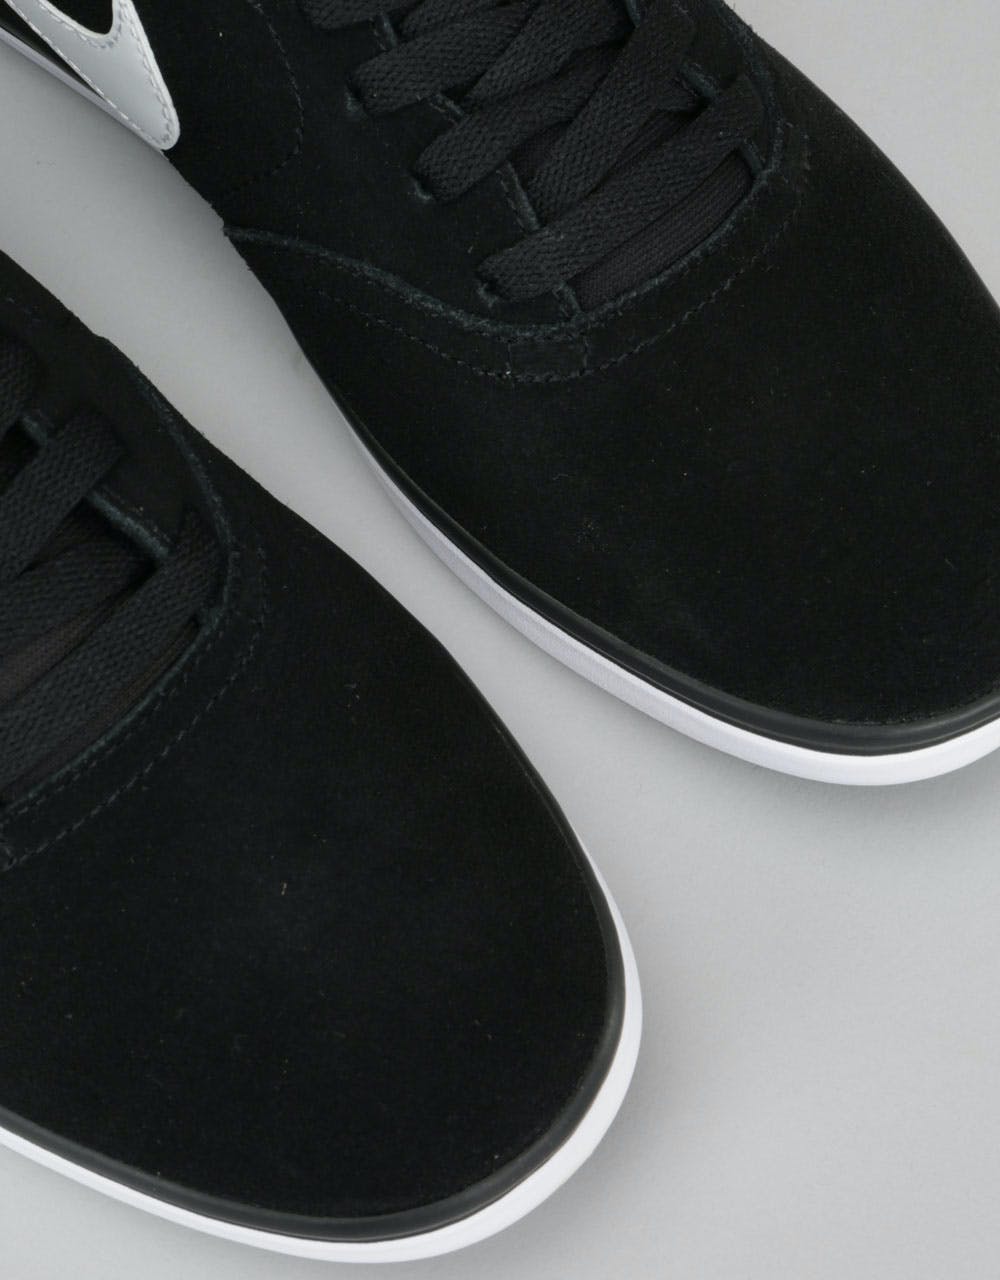 Nike SB Check Solarsoft Skate Shoes - Black/White